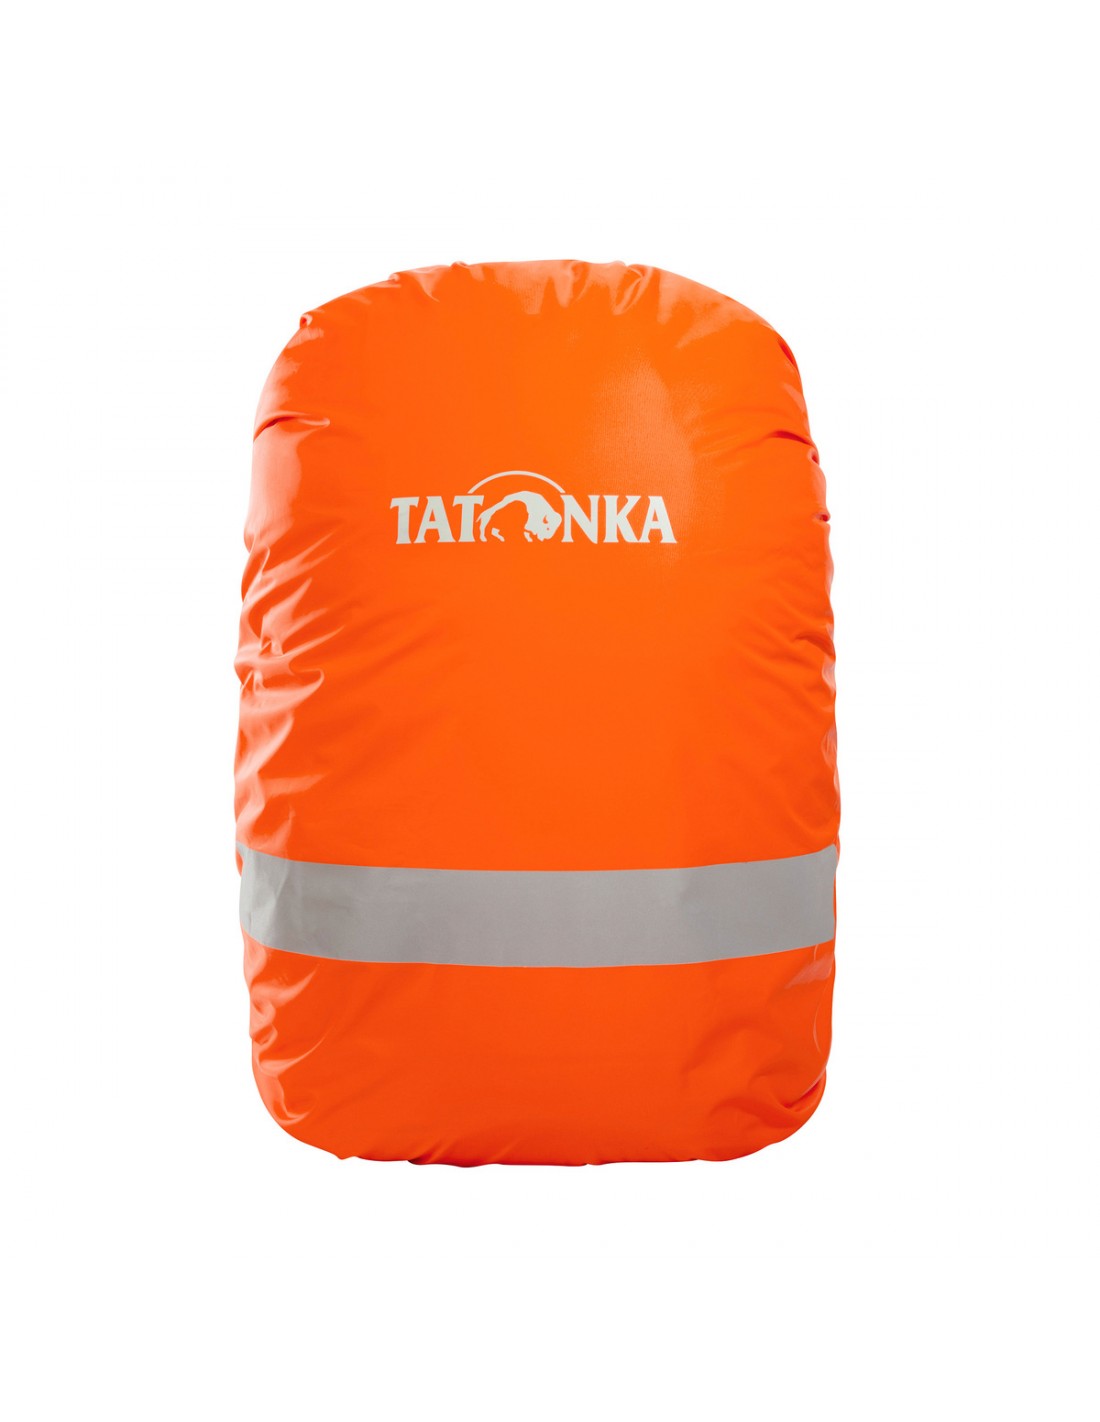 Tatonka Raincover Bike Daypack, Rucksack Regenhülle, Orange von Tatonka